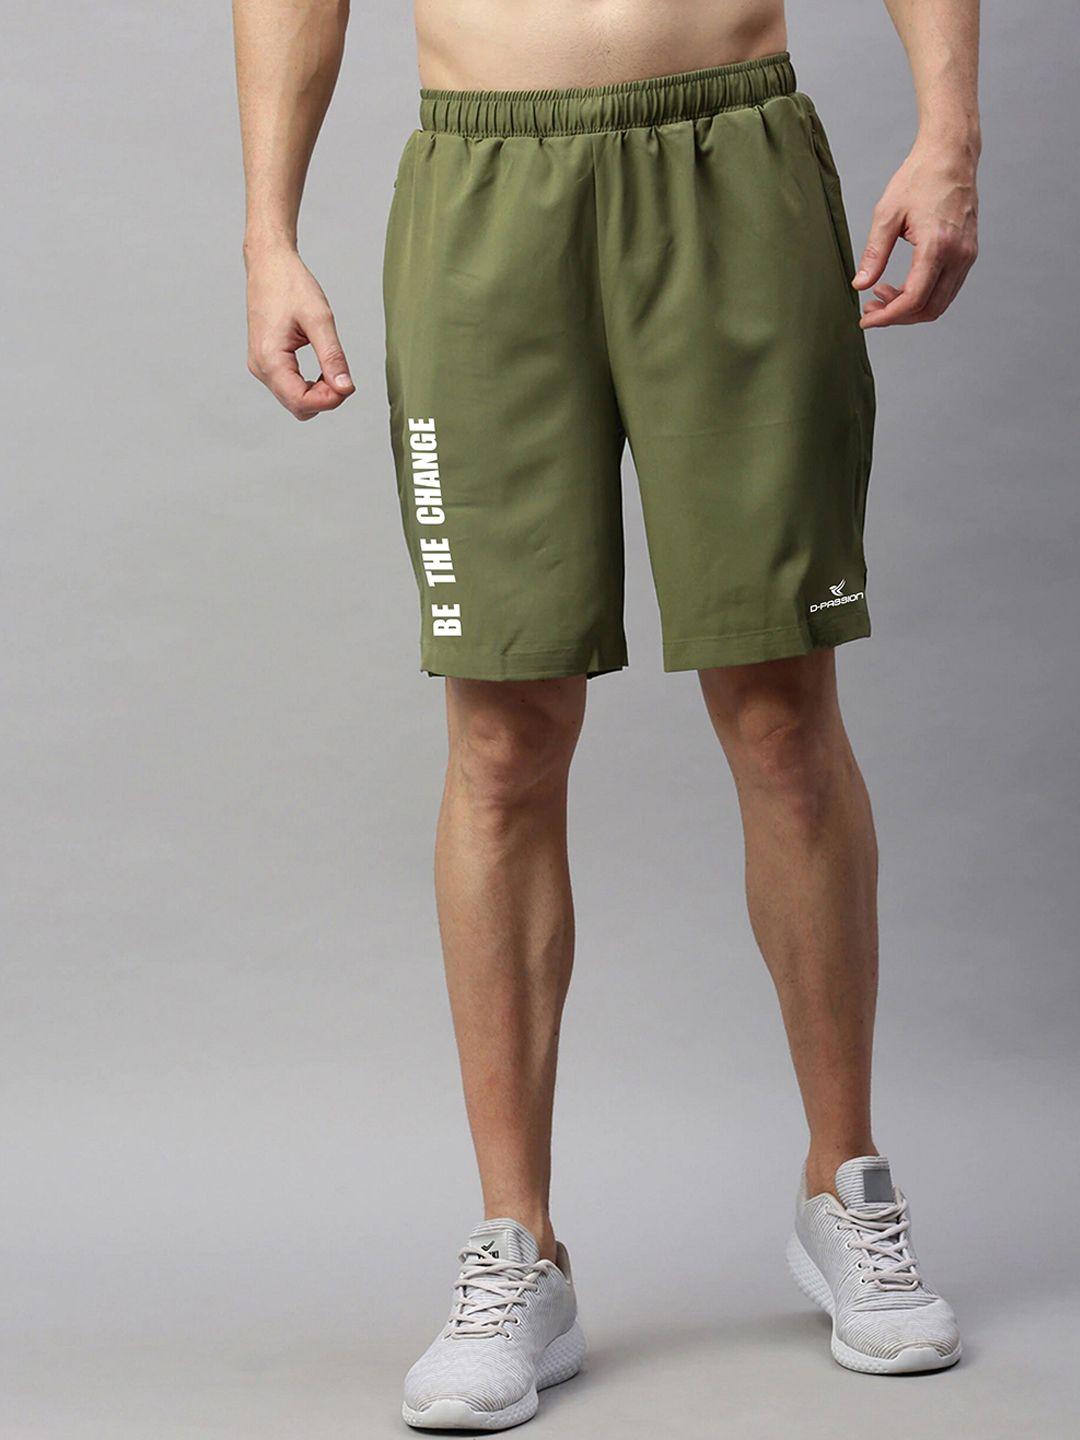 dpassion-men-olive-green-running-sports-shorts